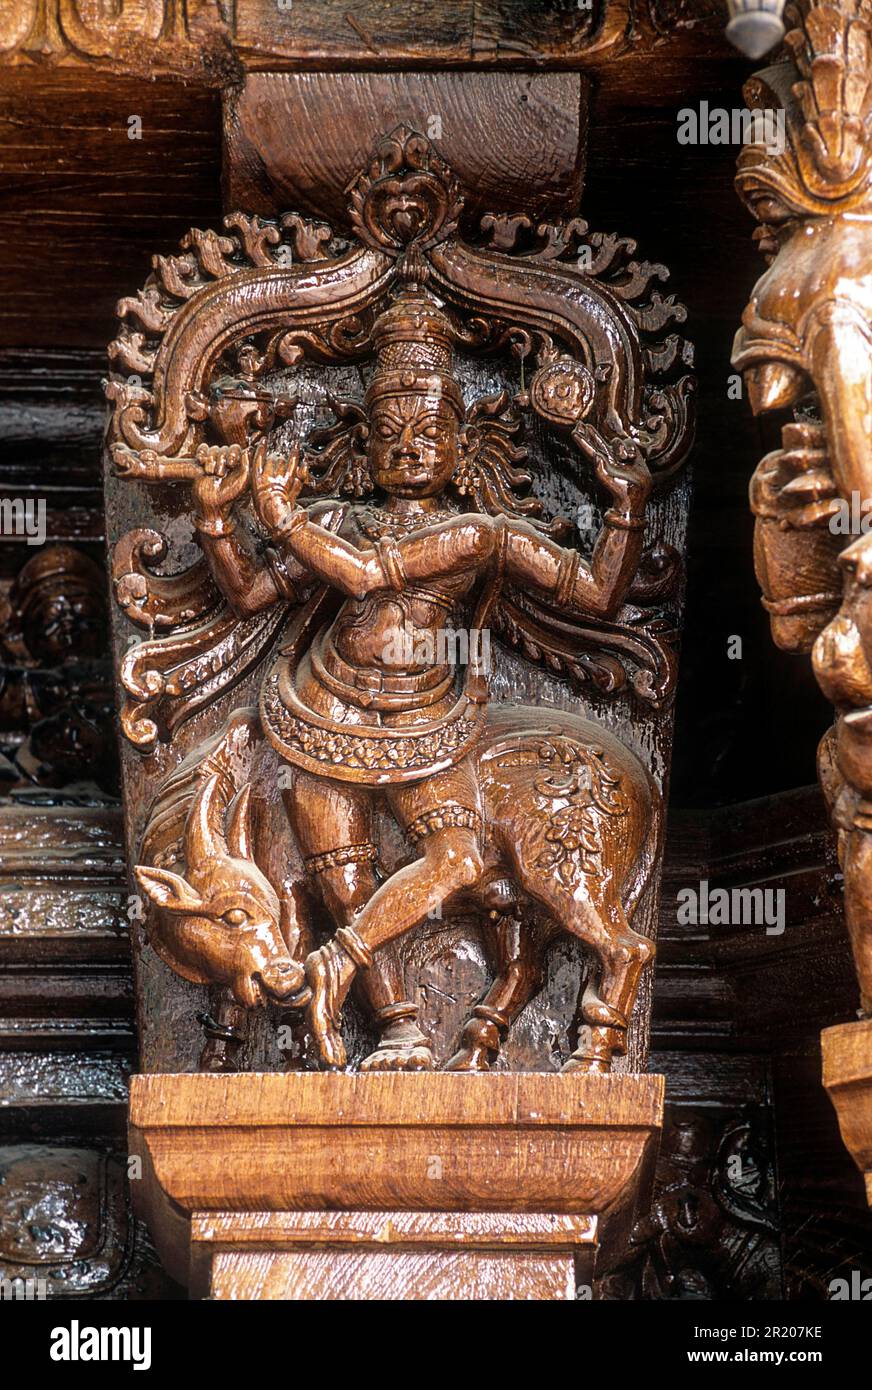 Venugopala Krishna with His Cow, 17th century wooden carvings in Meenakshi-Sundareswarar temple Chariot at Madurai, Tamil Nadu, South India, India Stock Photo